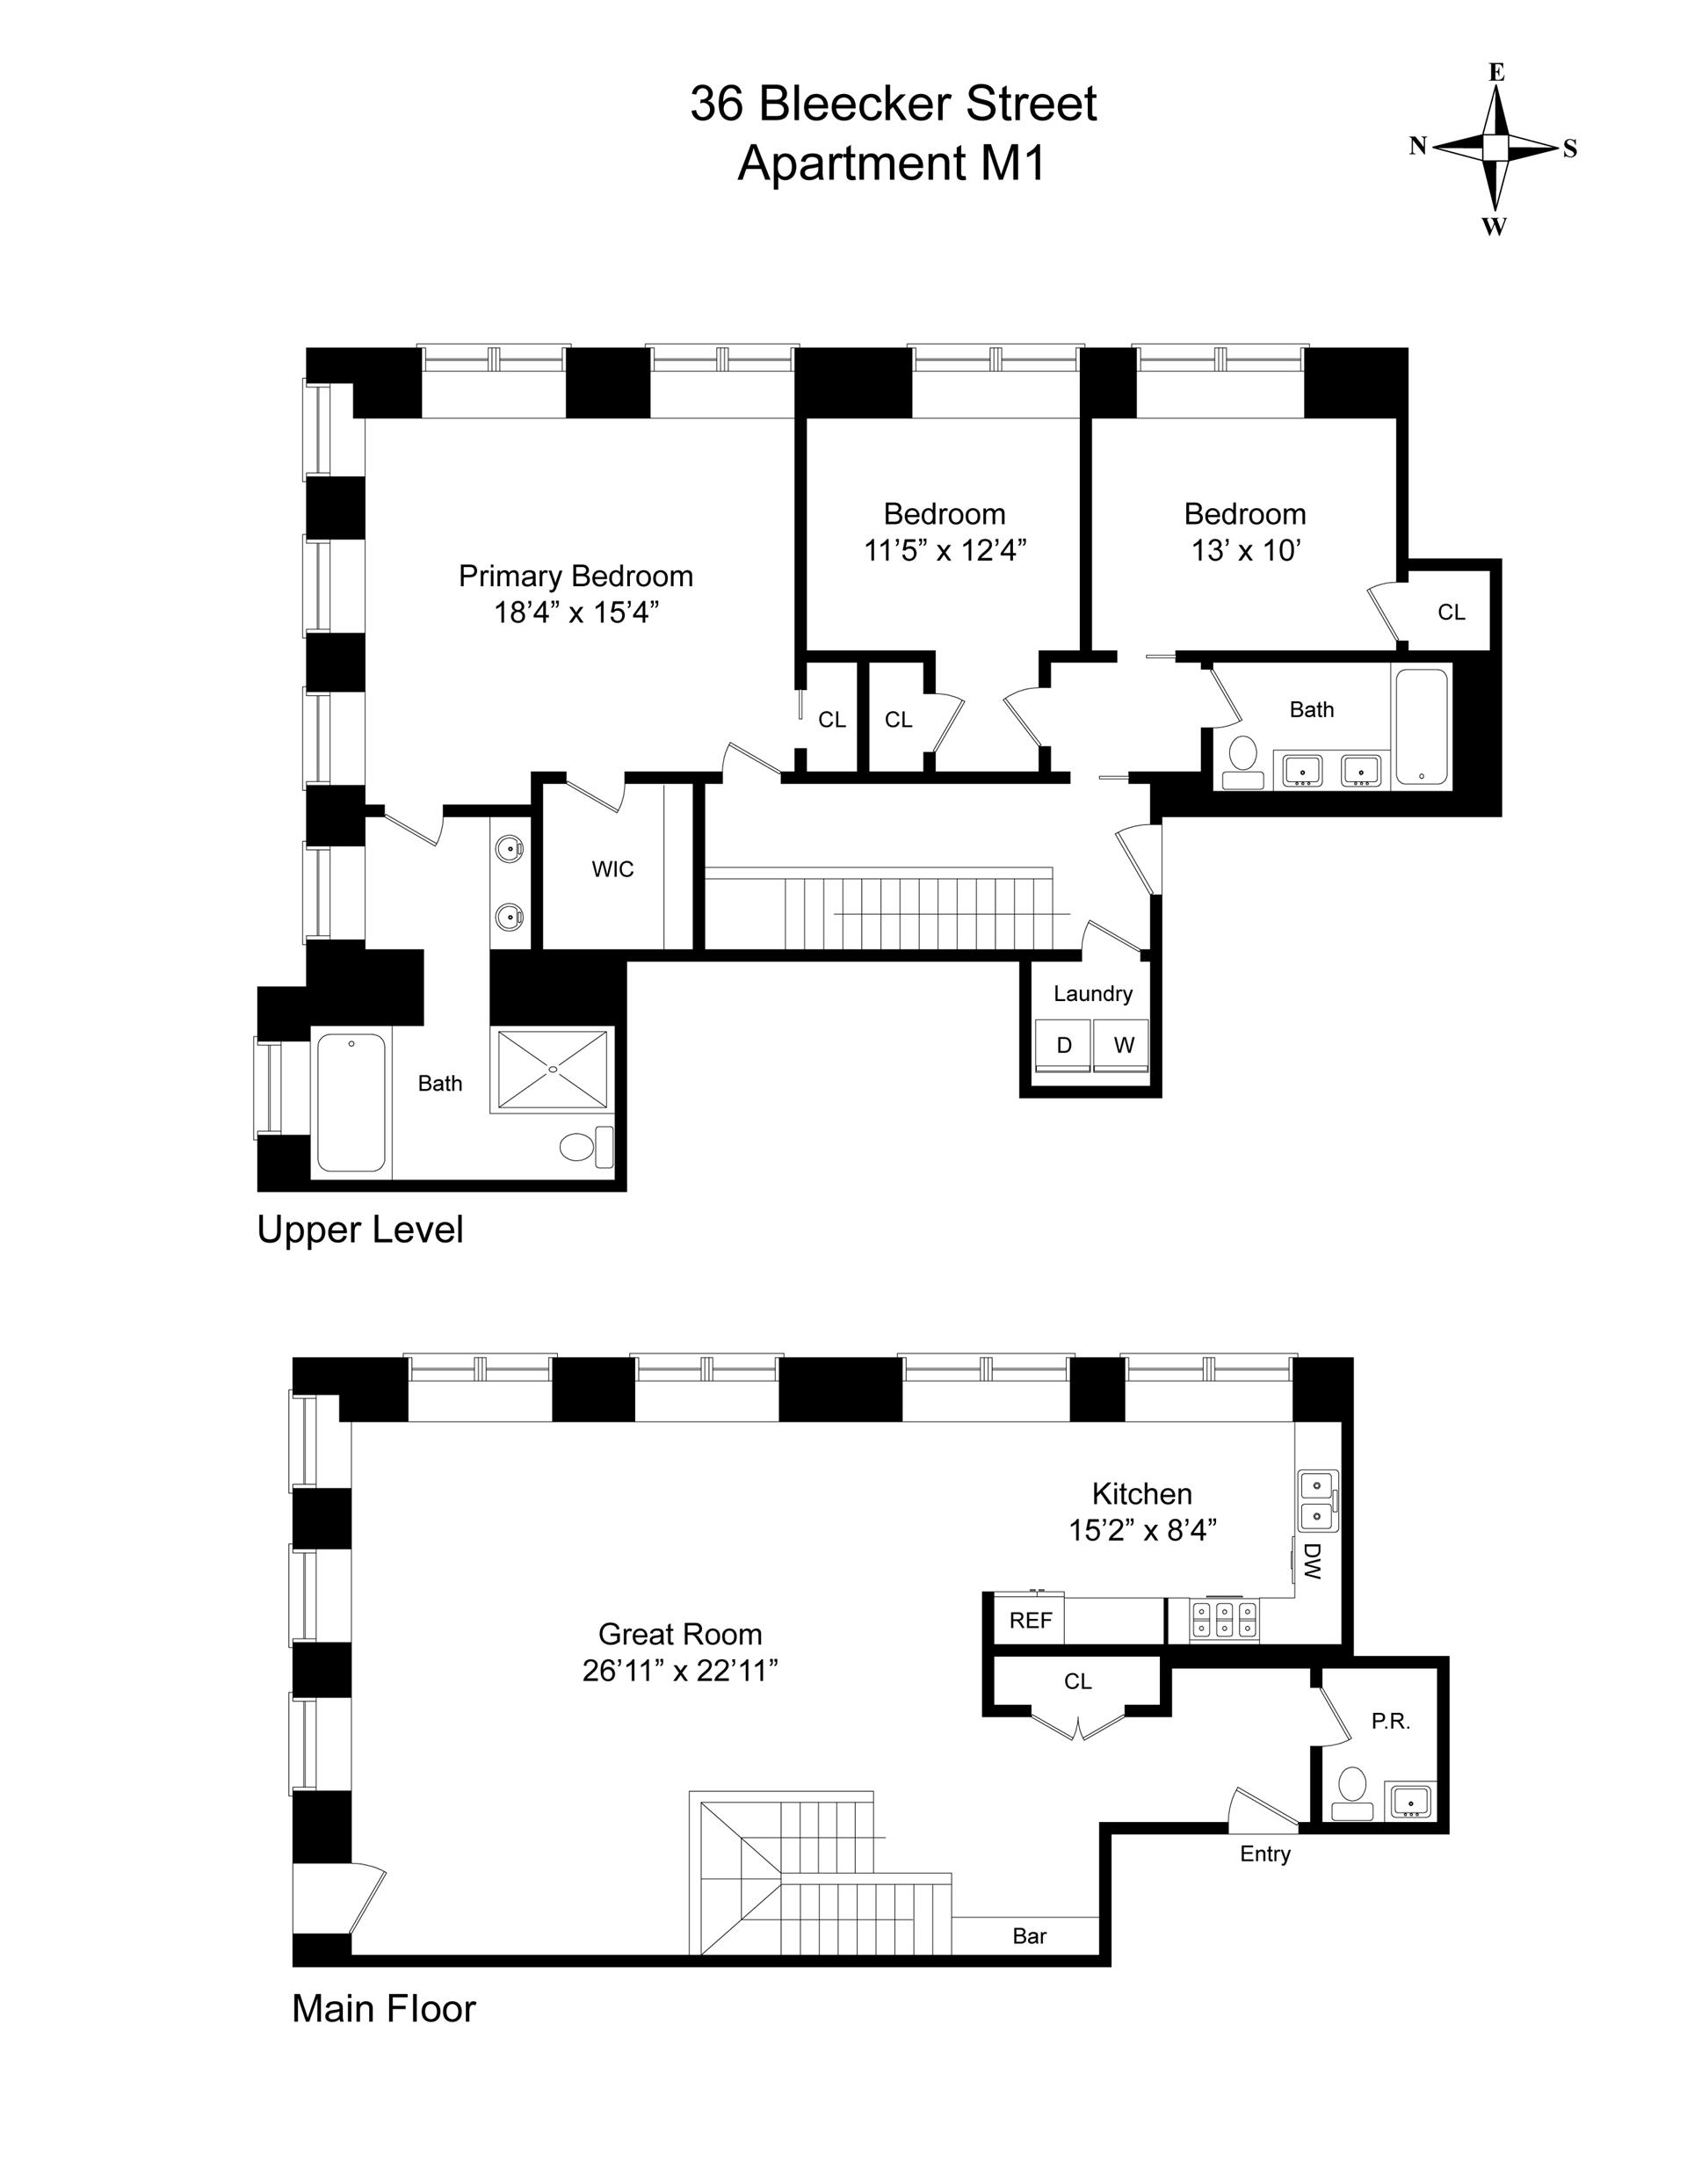 Floorplan for 36 Bleecker Street, M1